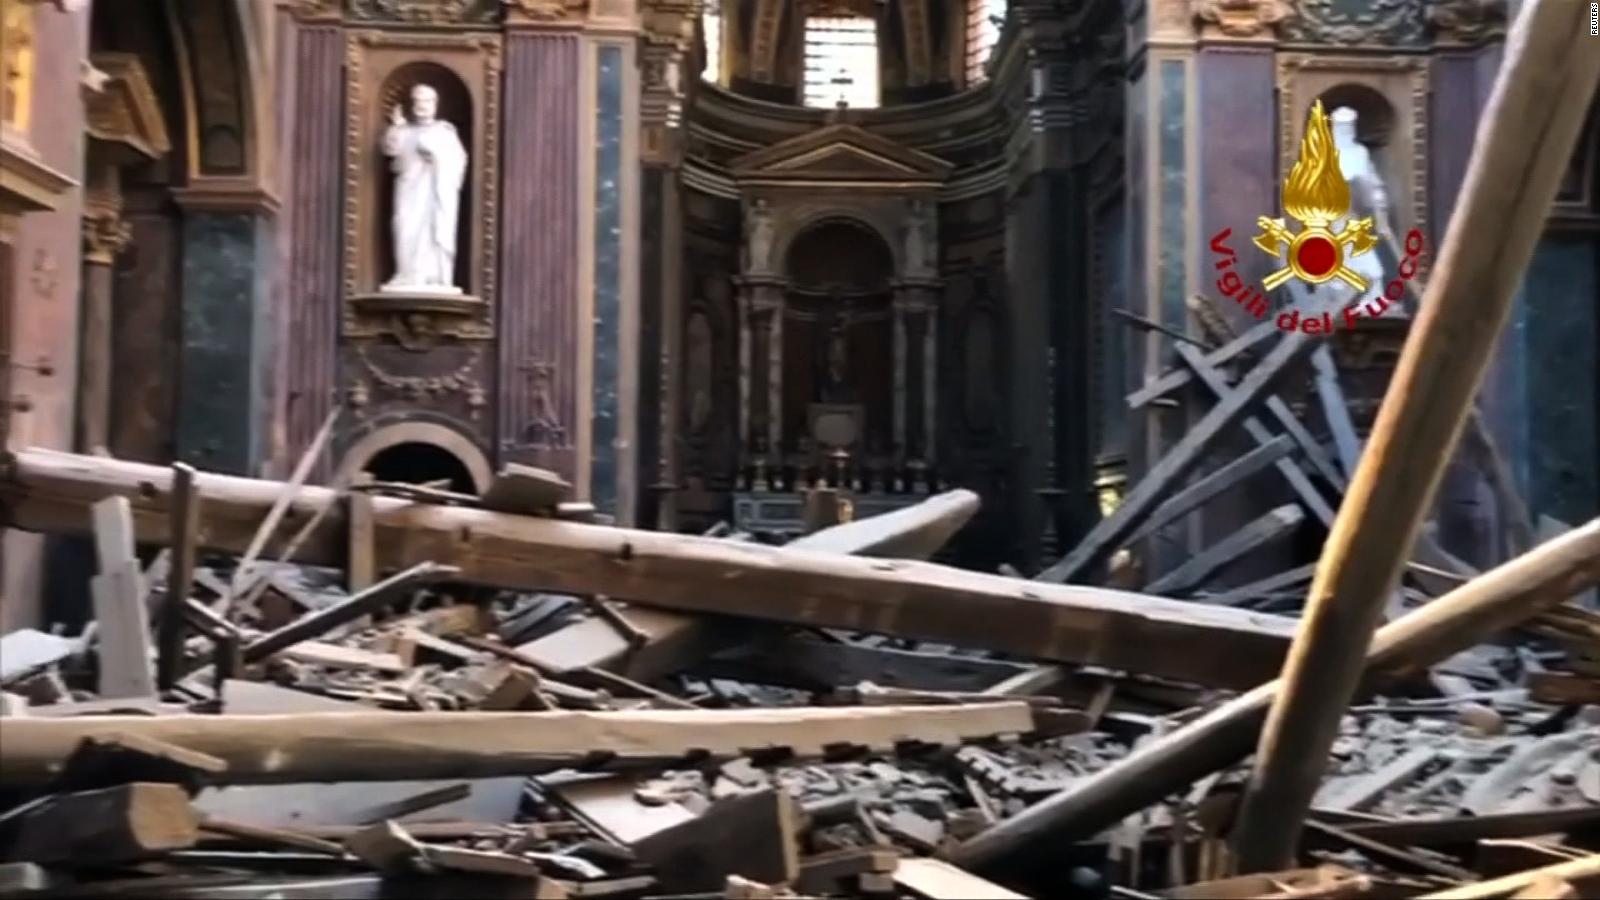 Colapsa techo de una iglesia en Roma | Video | CNN